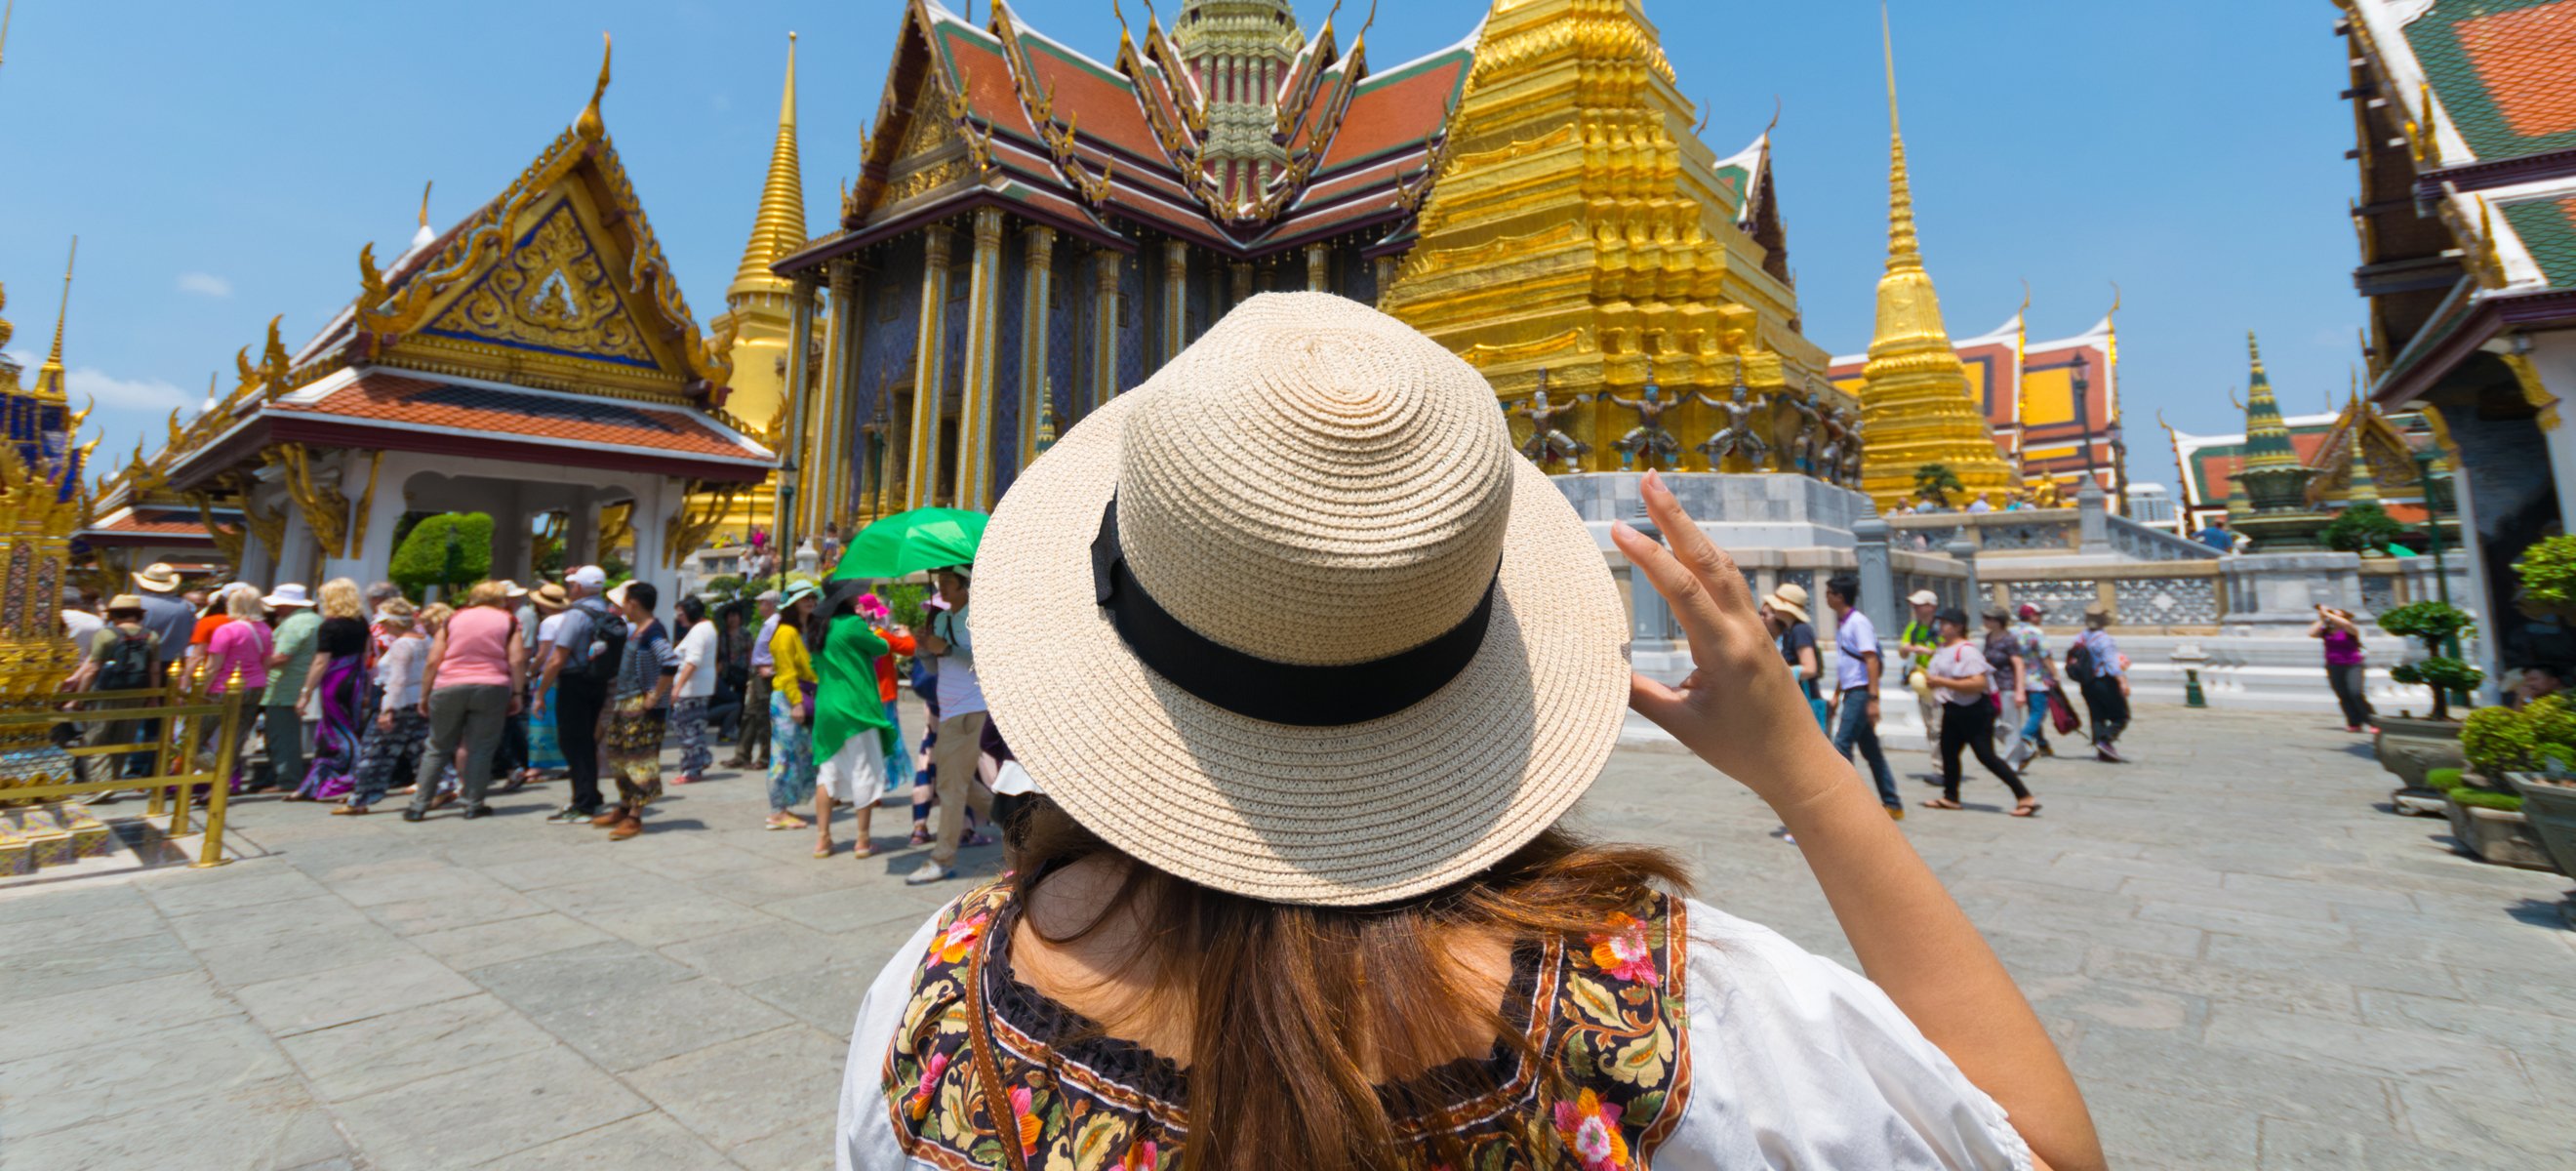 thailand-plans-tourist-tax-in-2022-falstaff